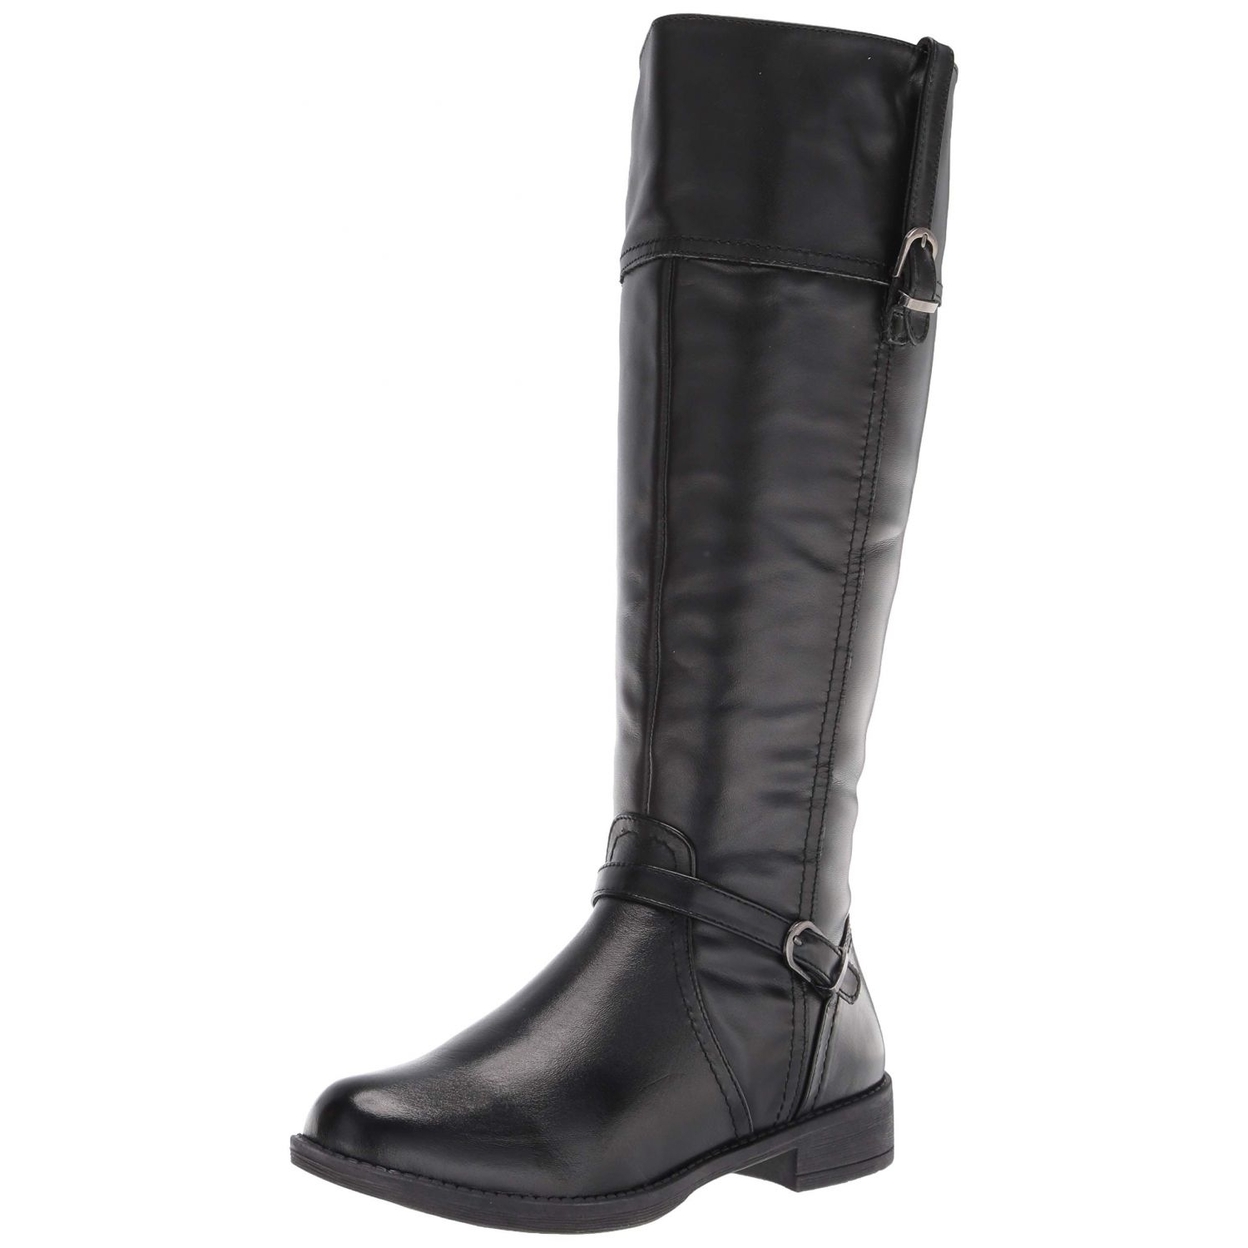 Propet Womens Tasha Zippered Casual Boots Knee High Low Heel 1-2 - Black BROWN - BROWN, 9.5